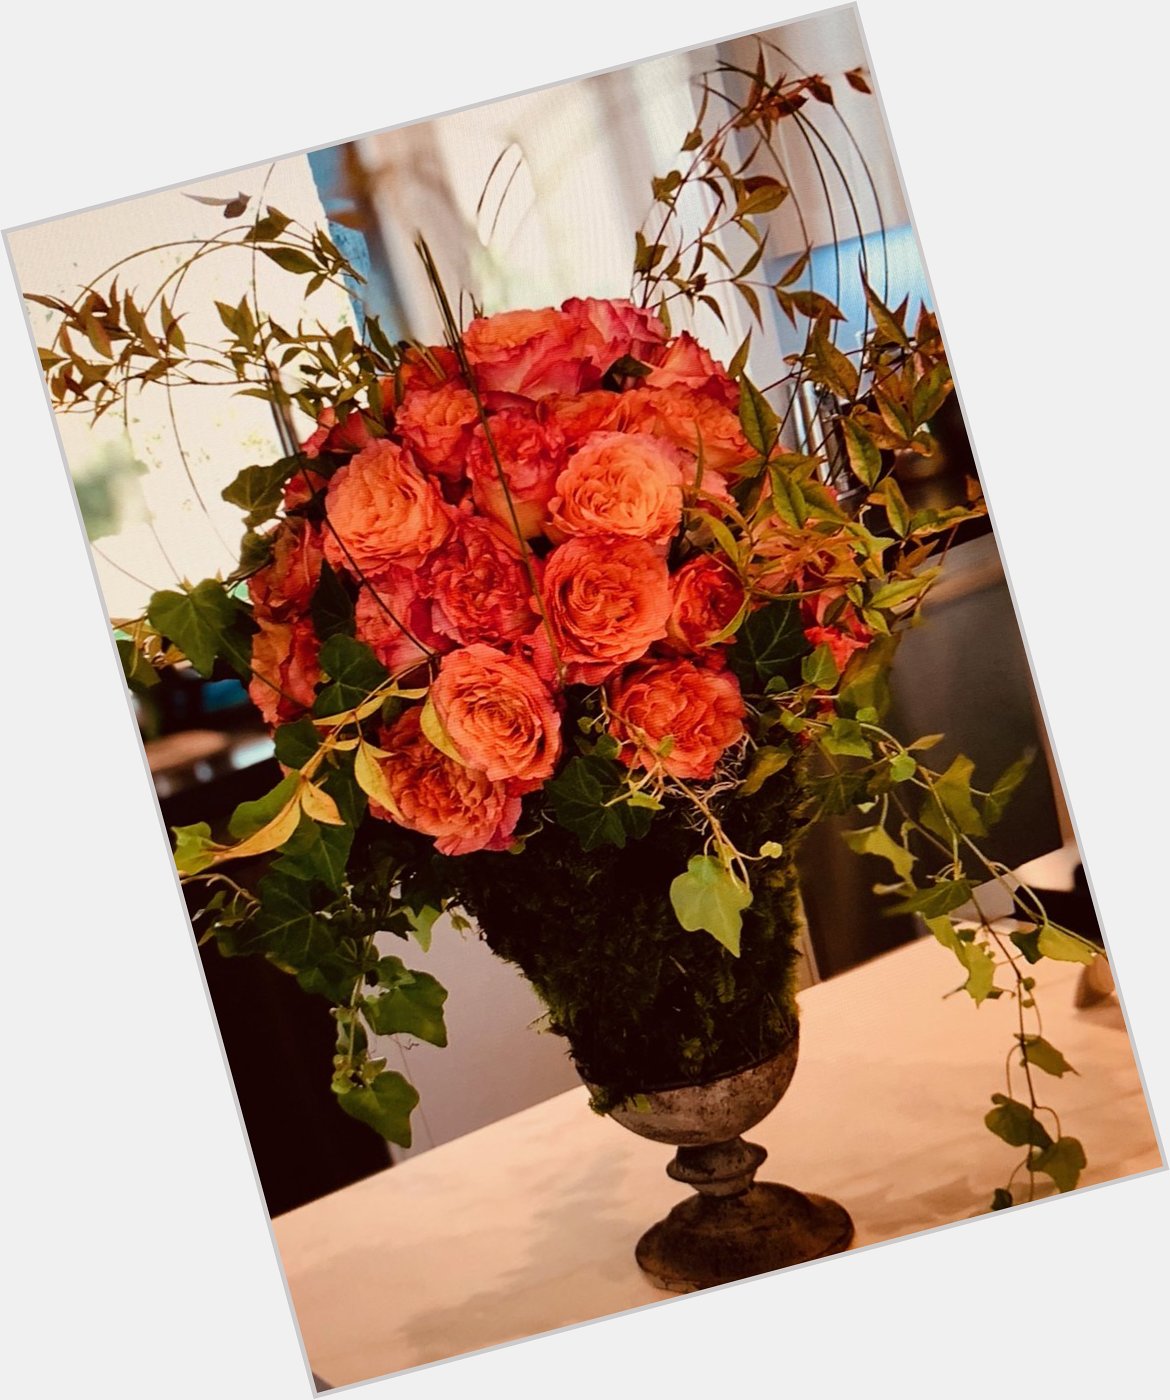 Happy Birthday Trisha Yearwood ! Garth sent roses. We all would if we knew where you were :)  